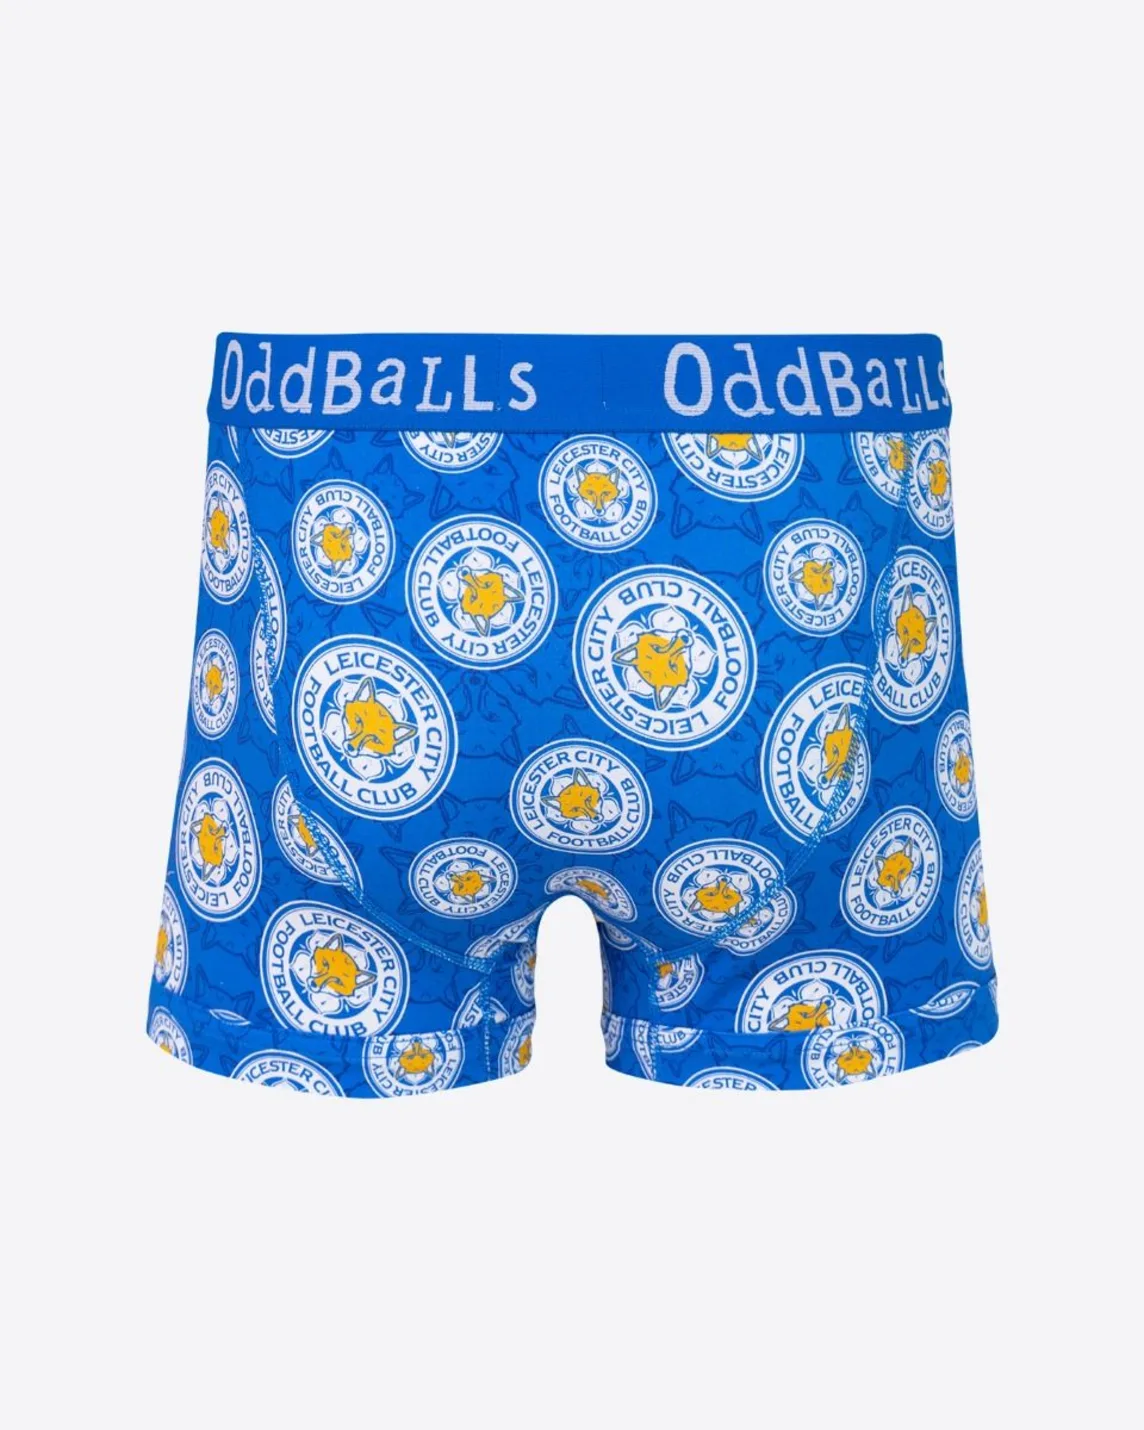 OddBalls on X: OddBalls - Underwear for real men!    / X